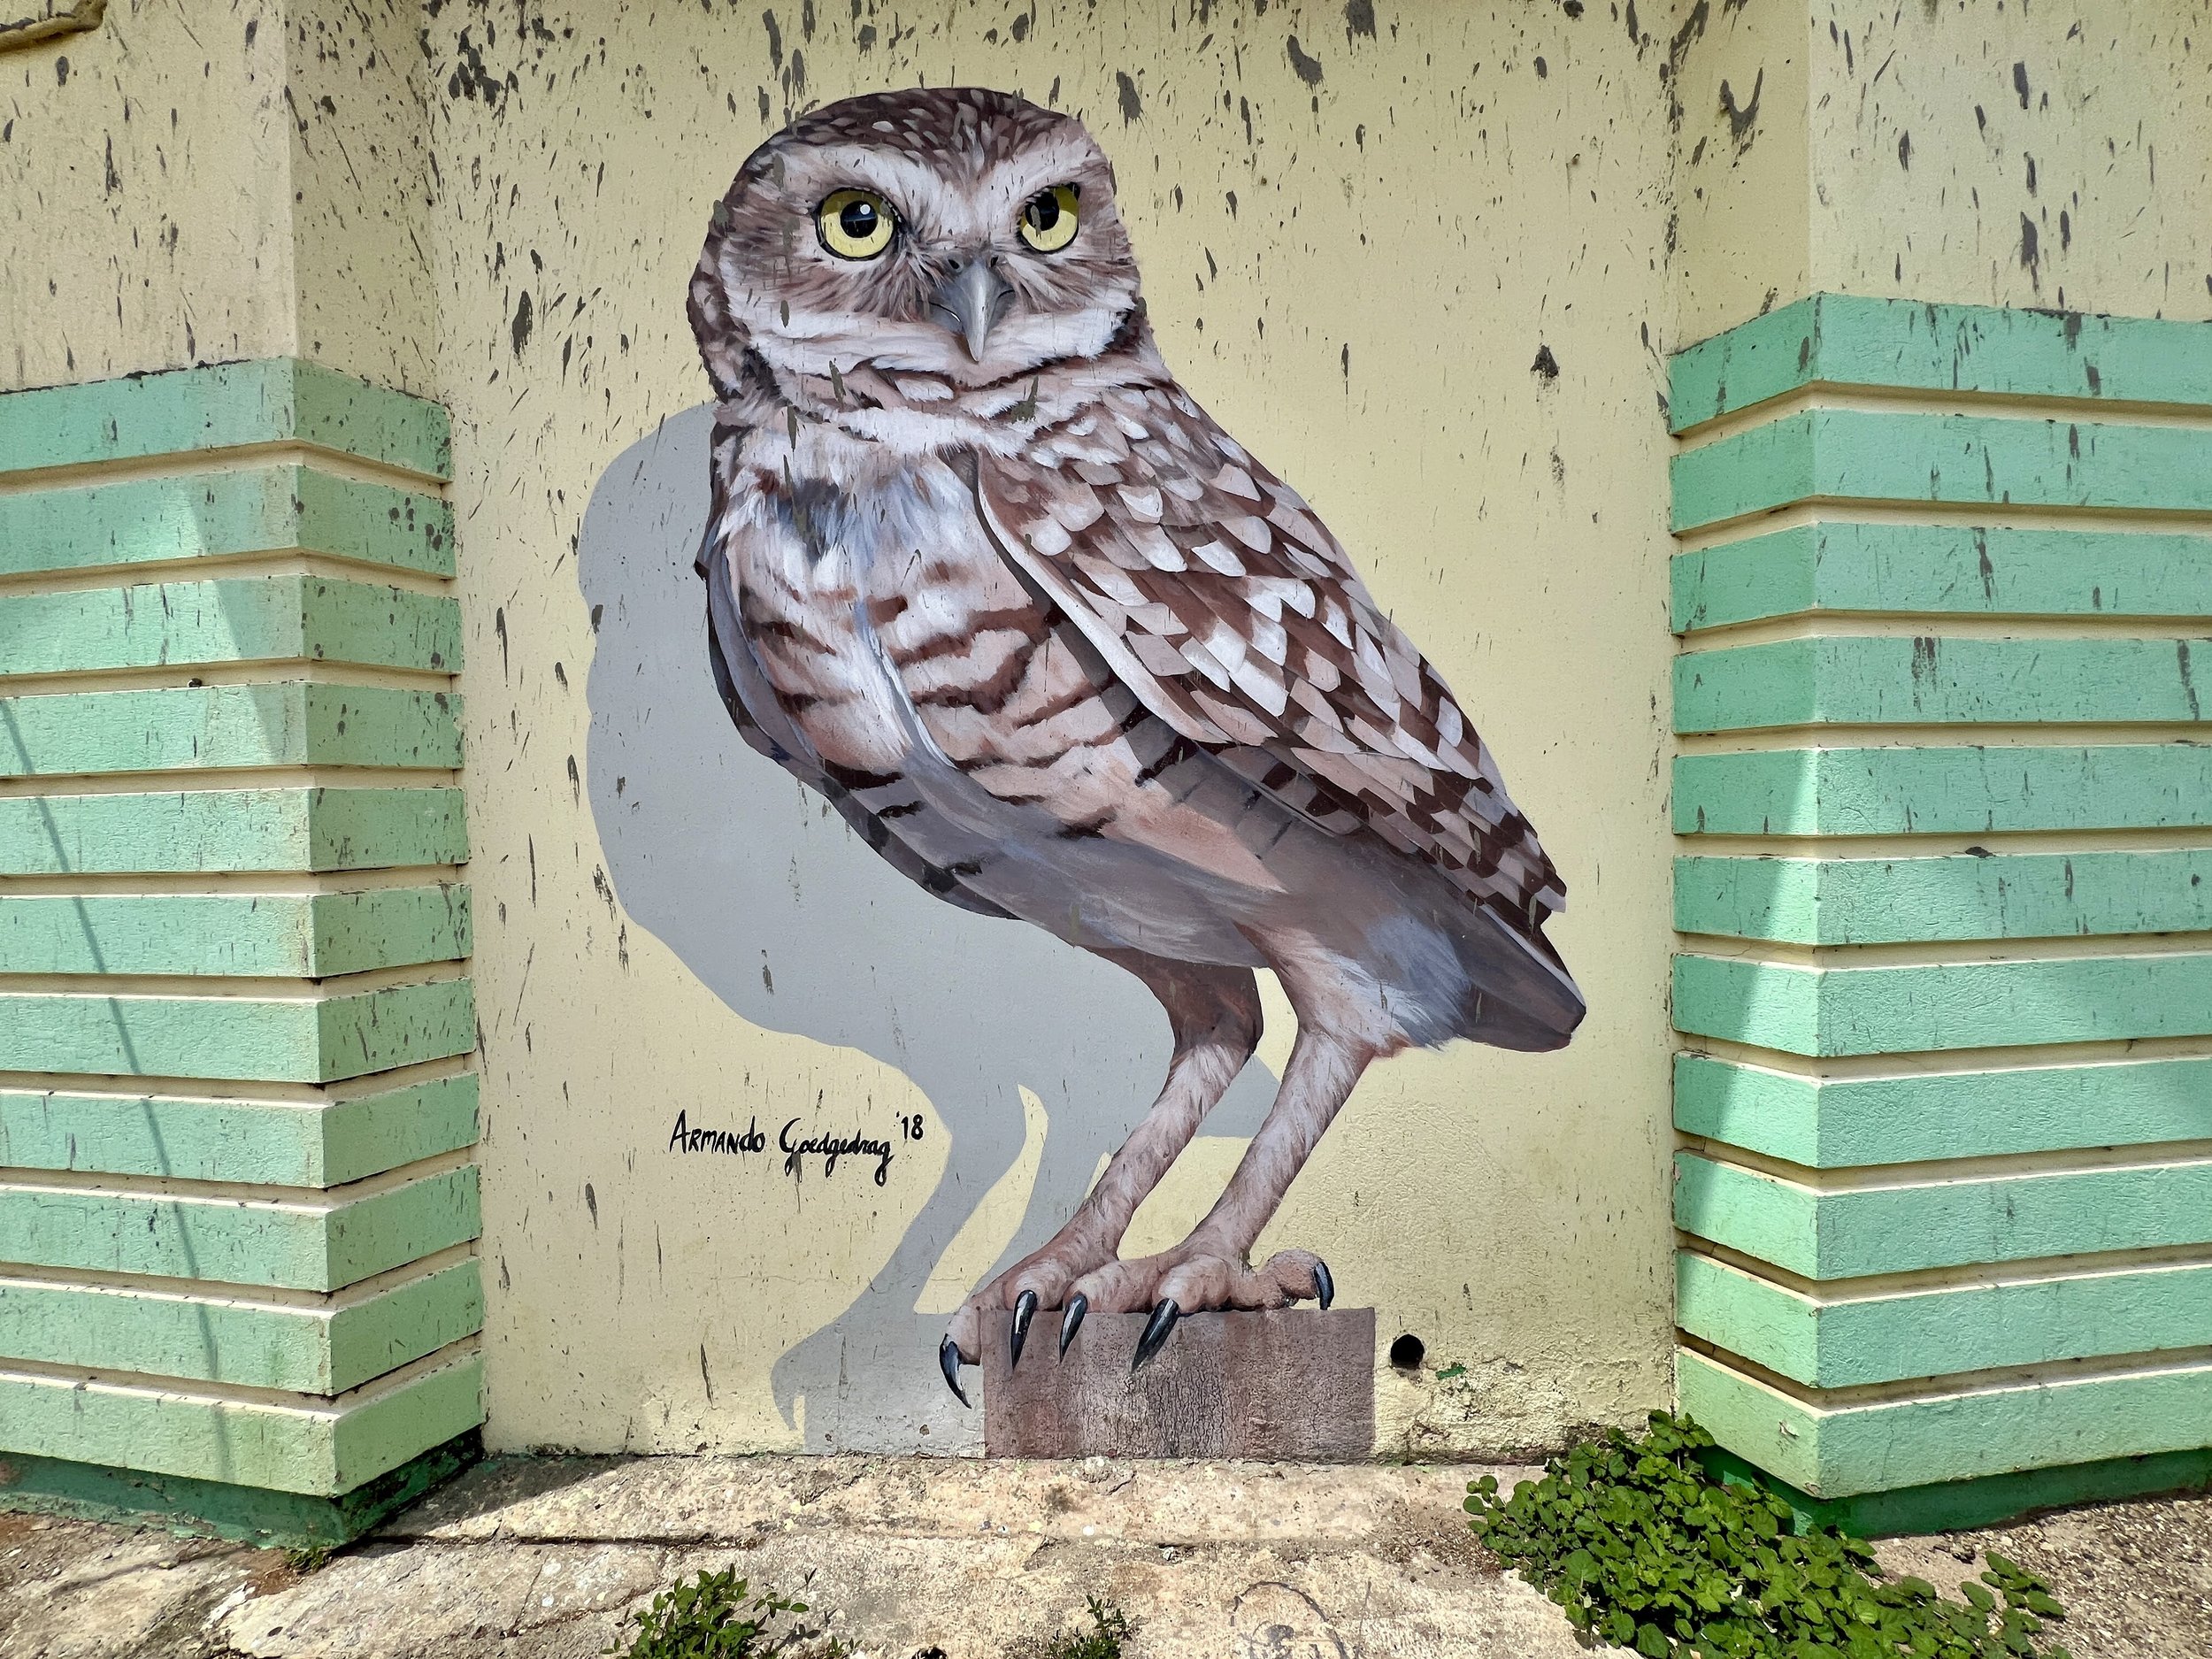 Shoco, a burrowing owl mural by Armando Goedgedrag in San Nicolas CREDIT Jennifer Bain.JPG